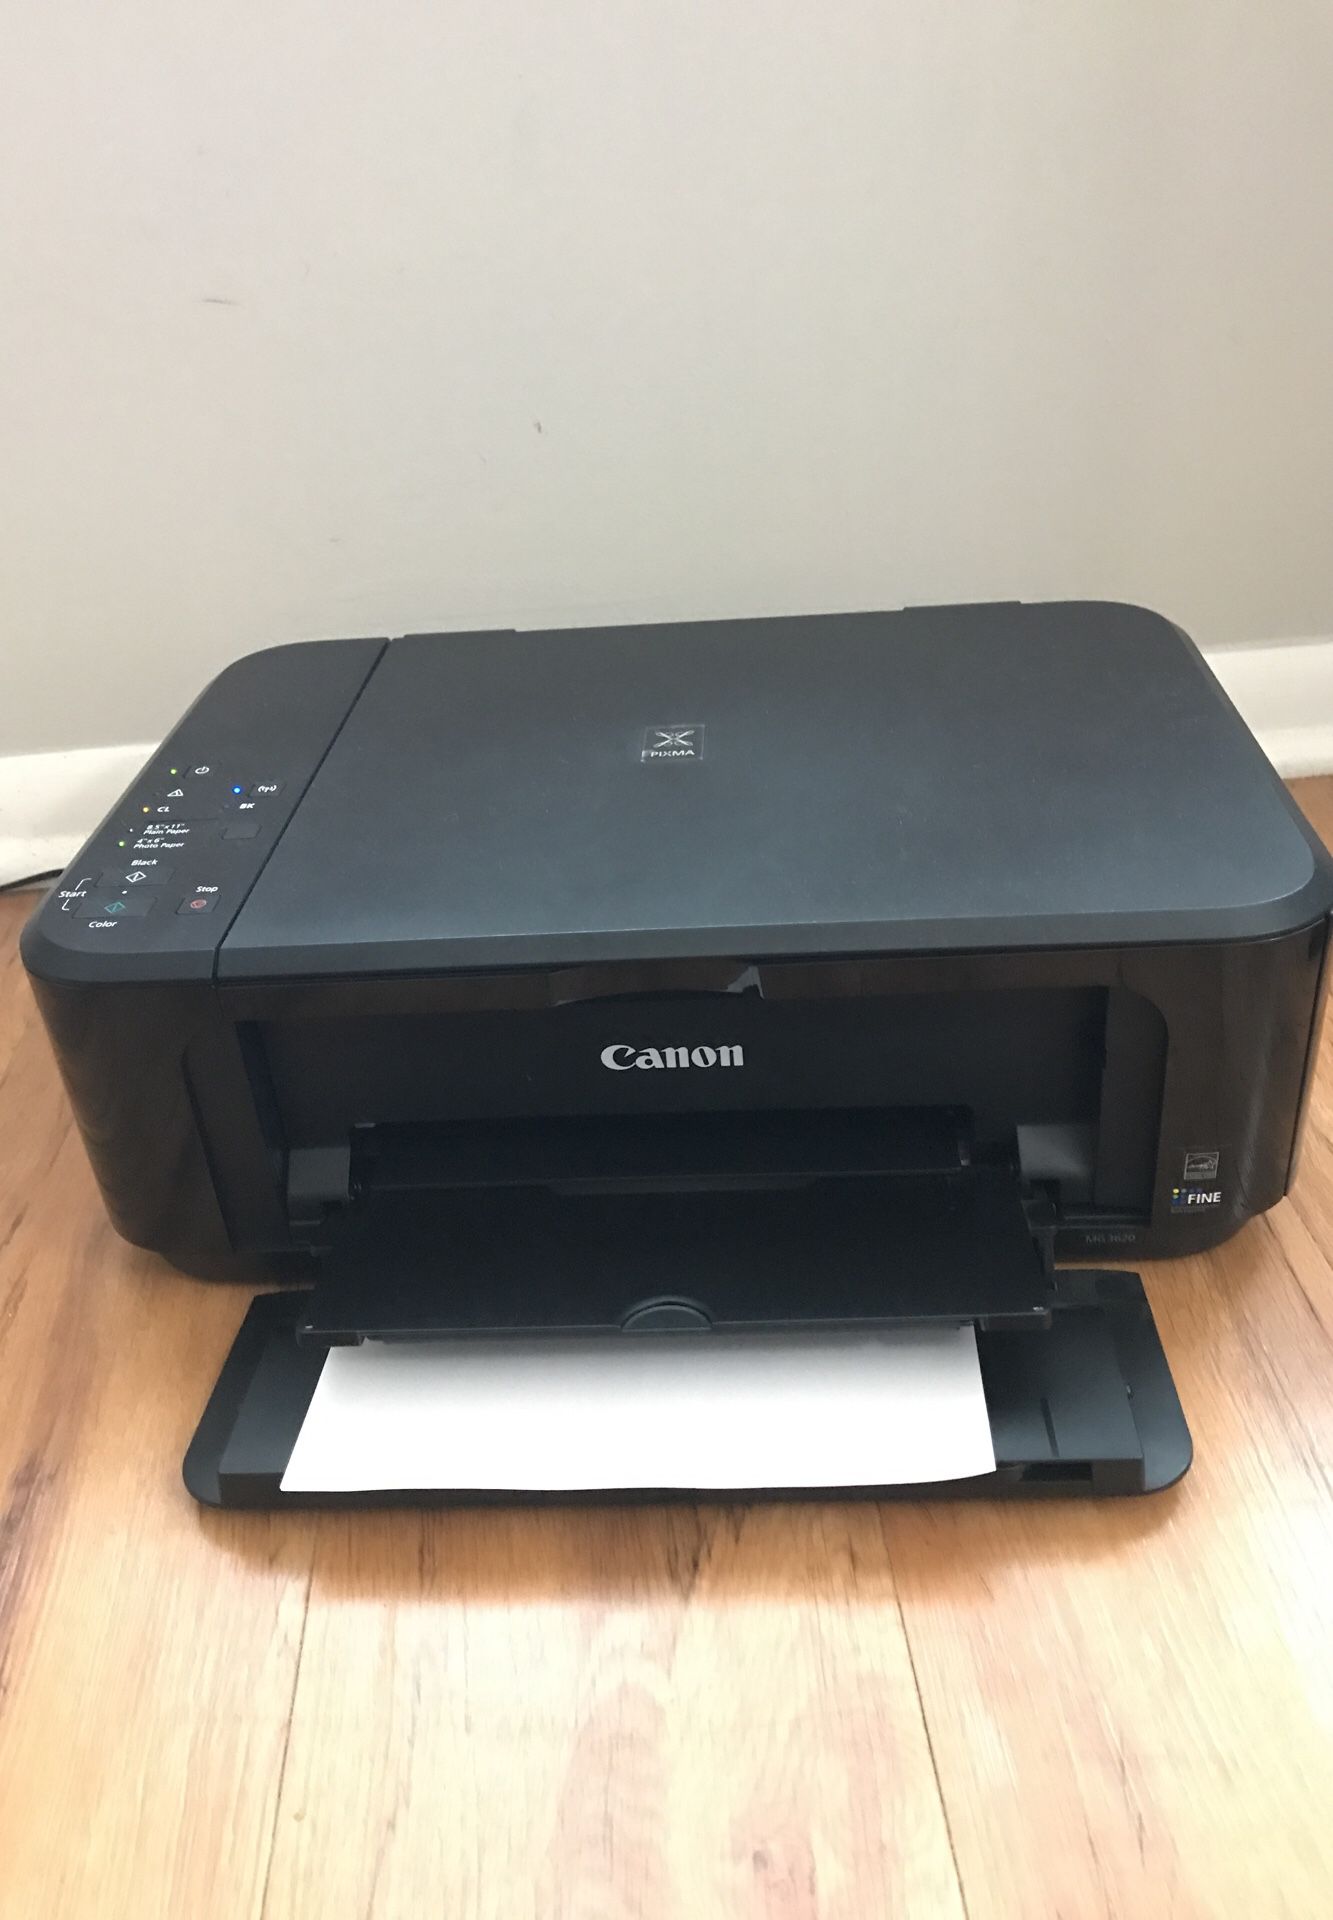 Canon Pixma MG3620 printer/scanner